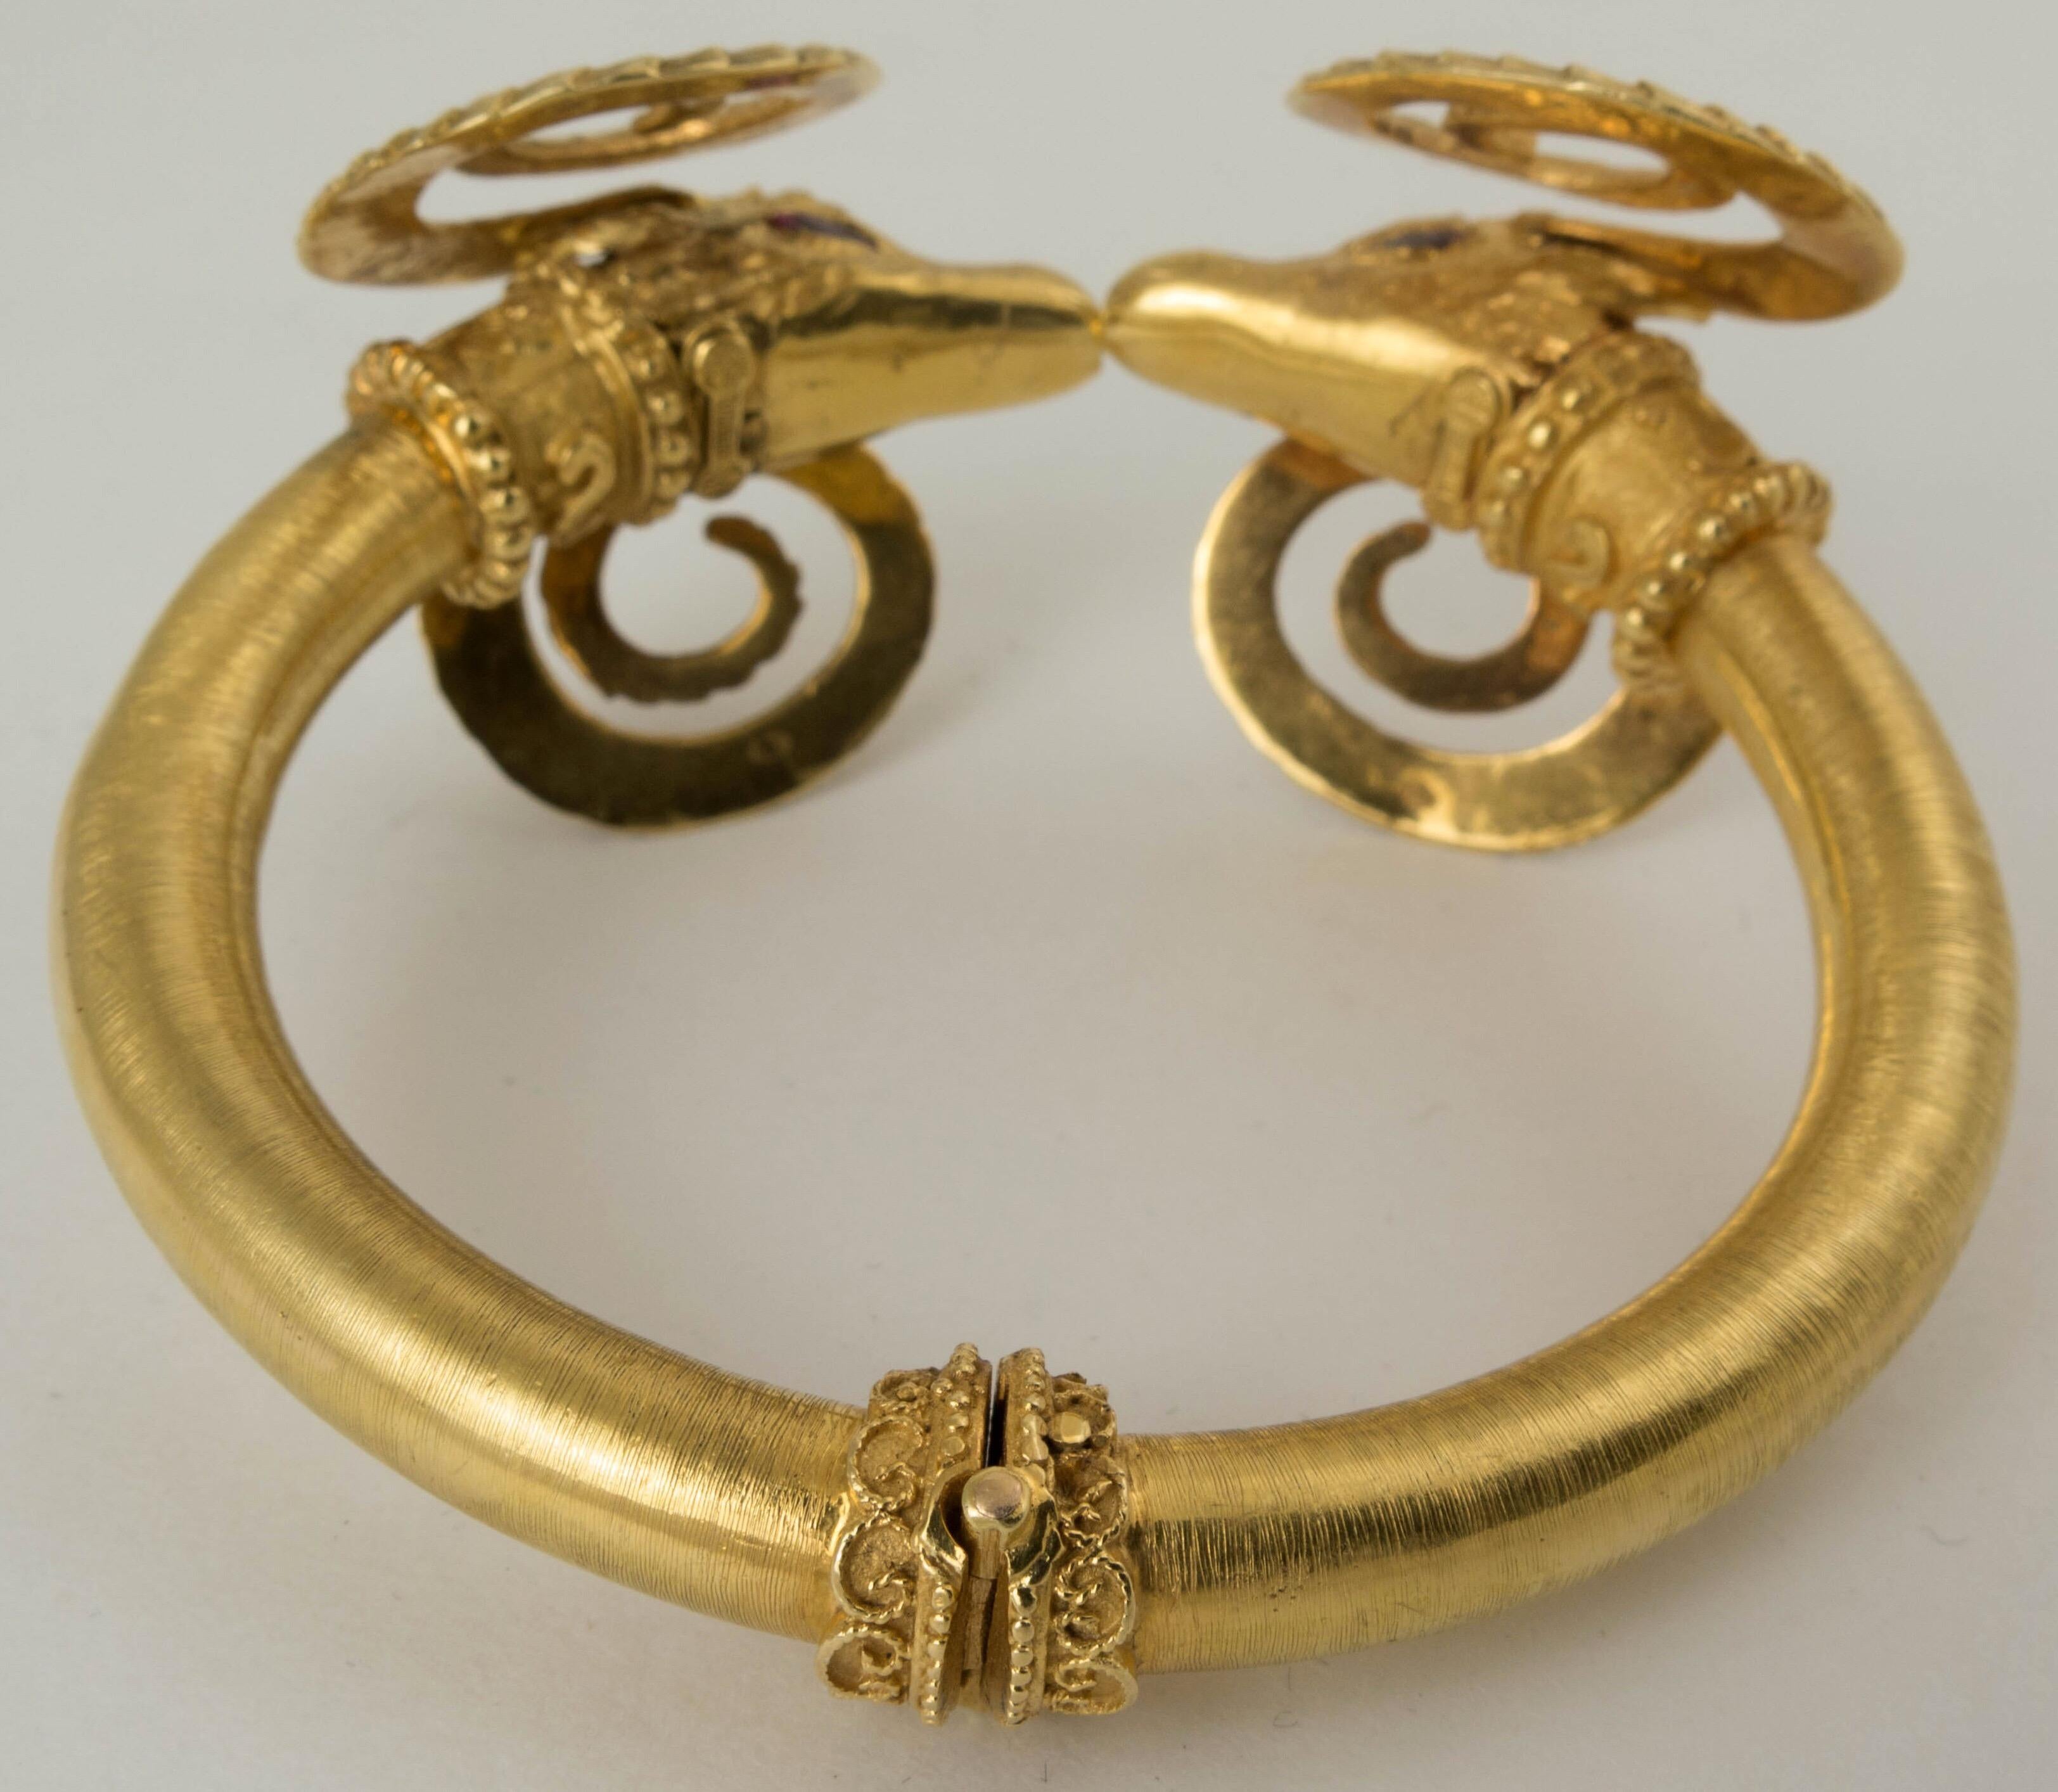 Zolotas 18 Karat Gold Two Ram Heads Bangle Bracelet 1